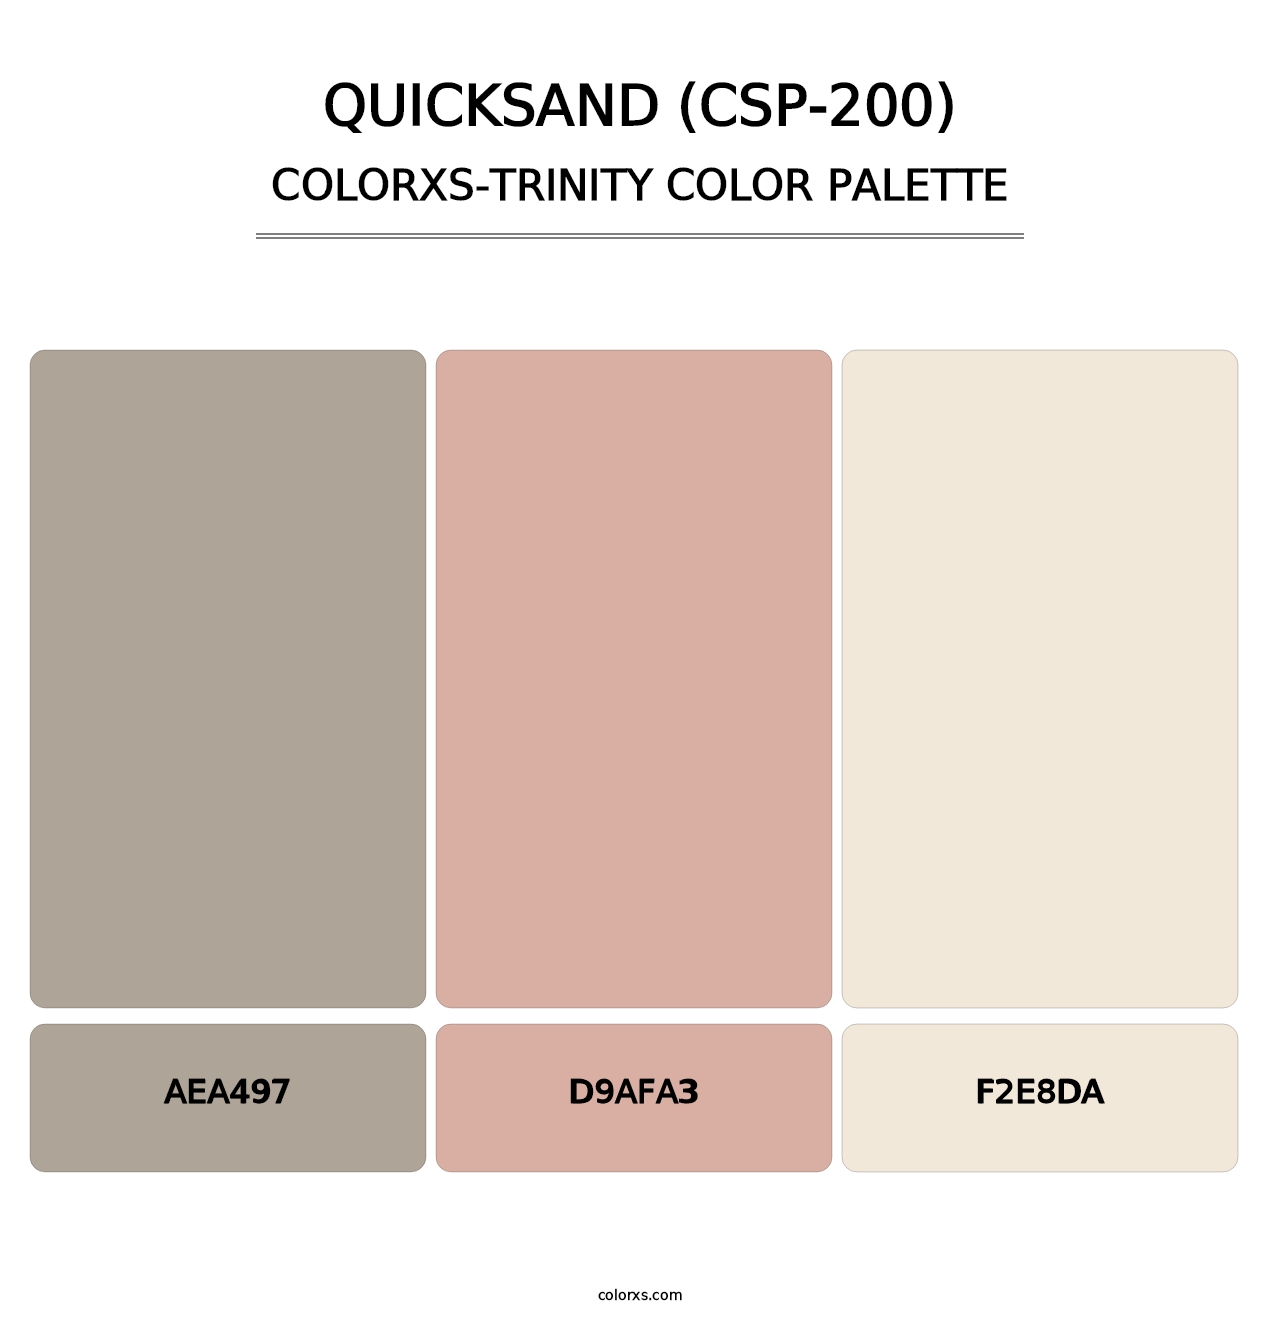 Quicksand (CSP-200) - Colorxs Trinity Palette